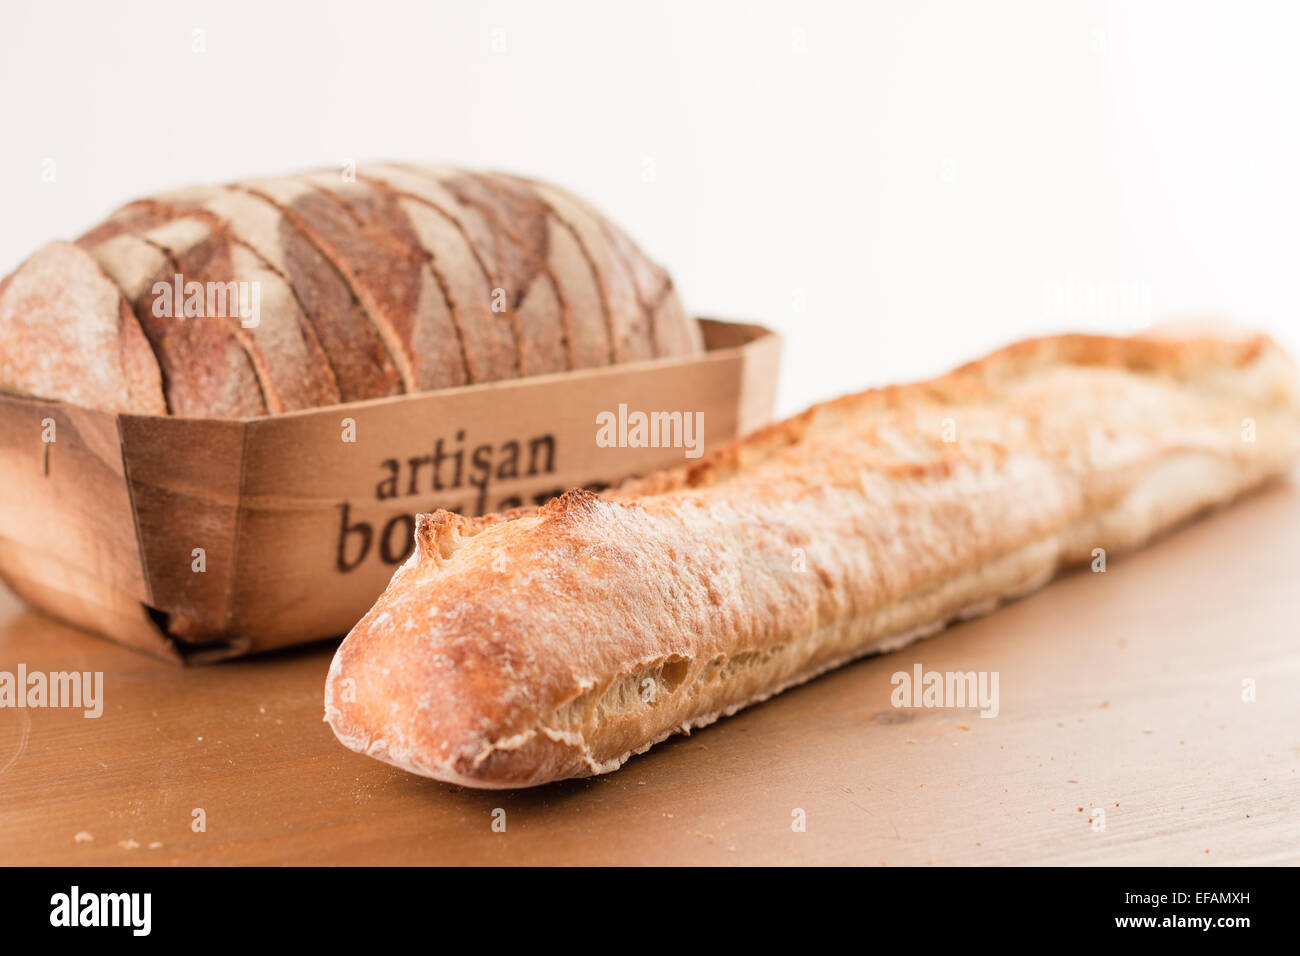 baked goods Stock Photo